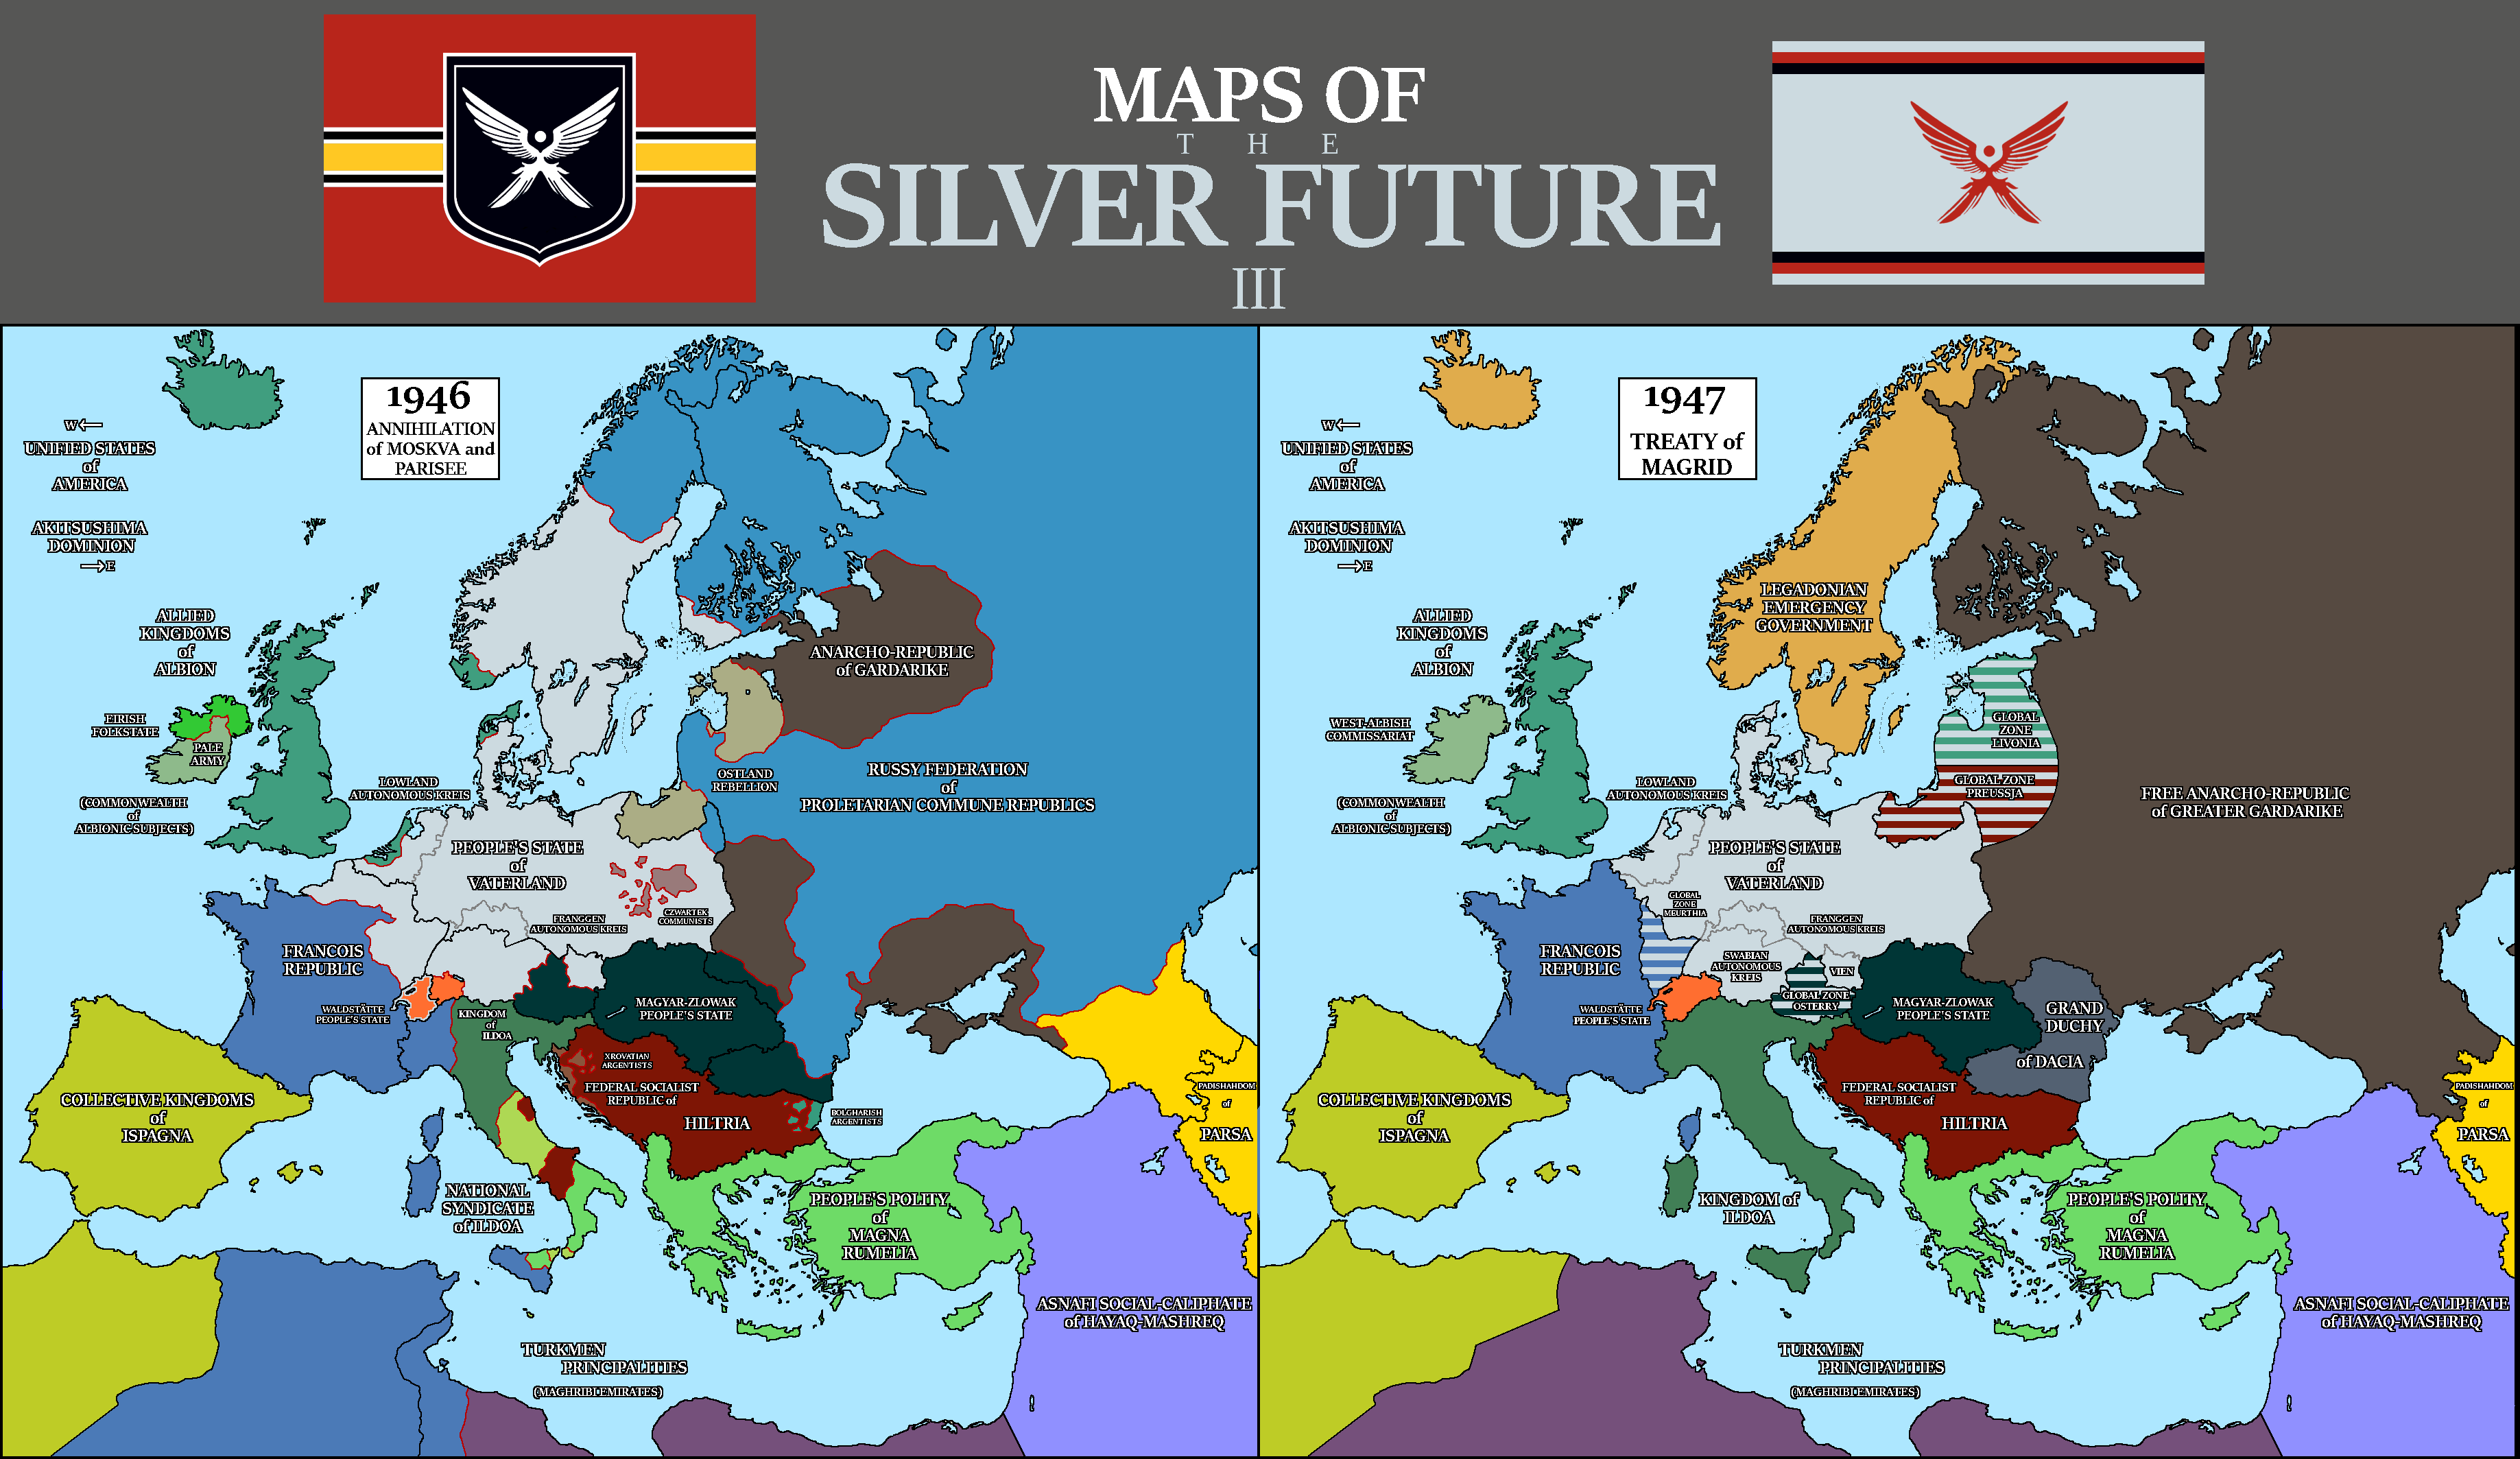 https://www.alternatehistory.com/forum/attachments/silverfuture_maps3-png.610526/